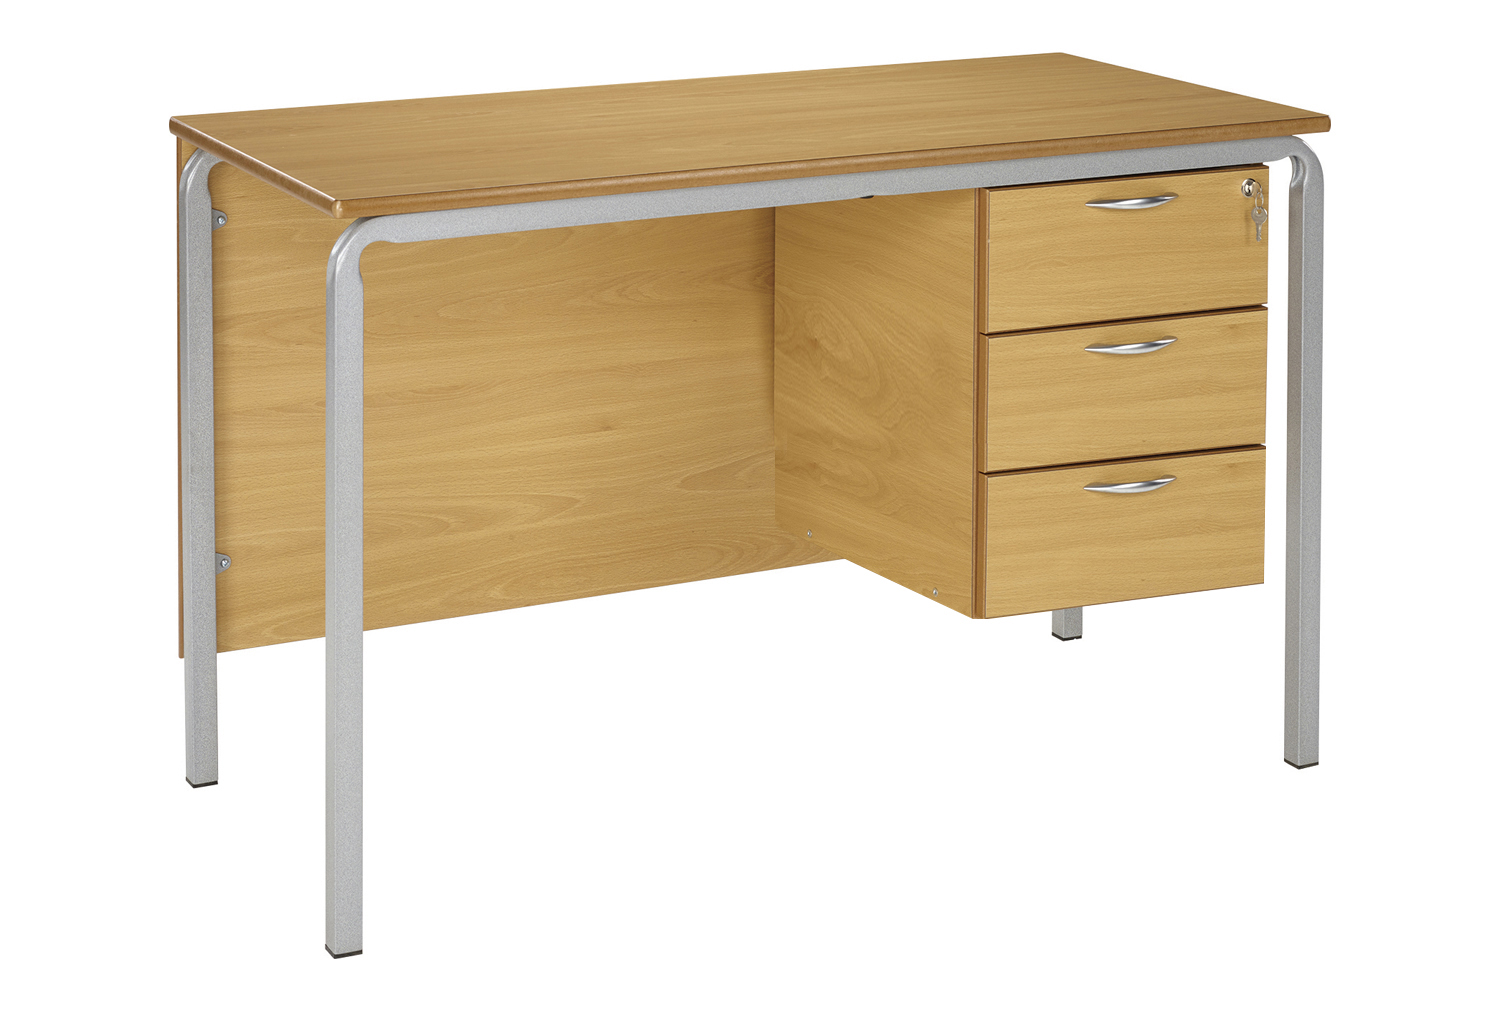 Crush Bent Teachers Desk With 3 Drawers 120wx60d, 120wx60dx71h (cm), Black Frame, Beech Top